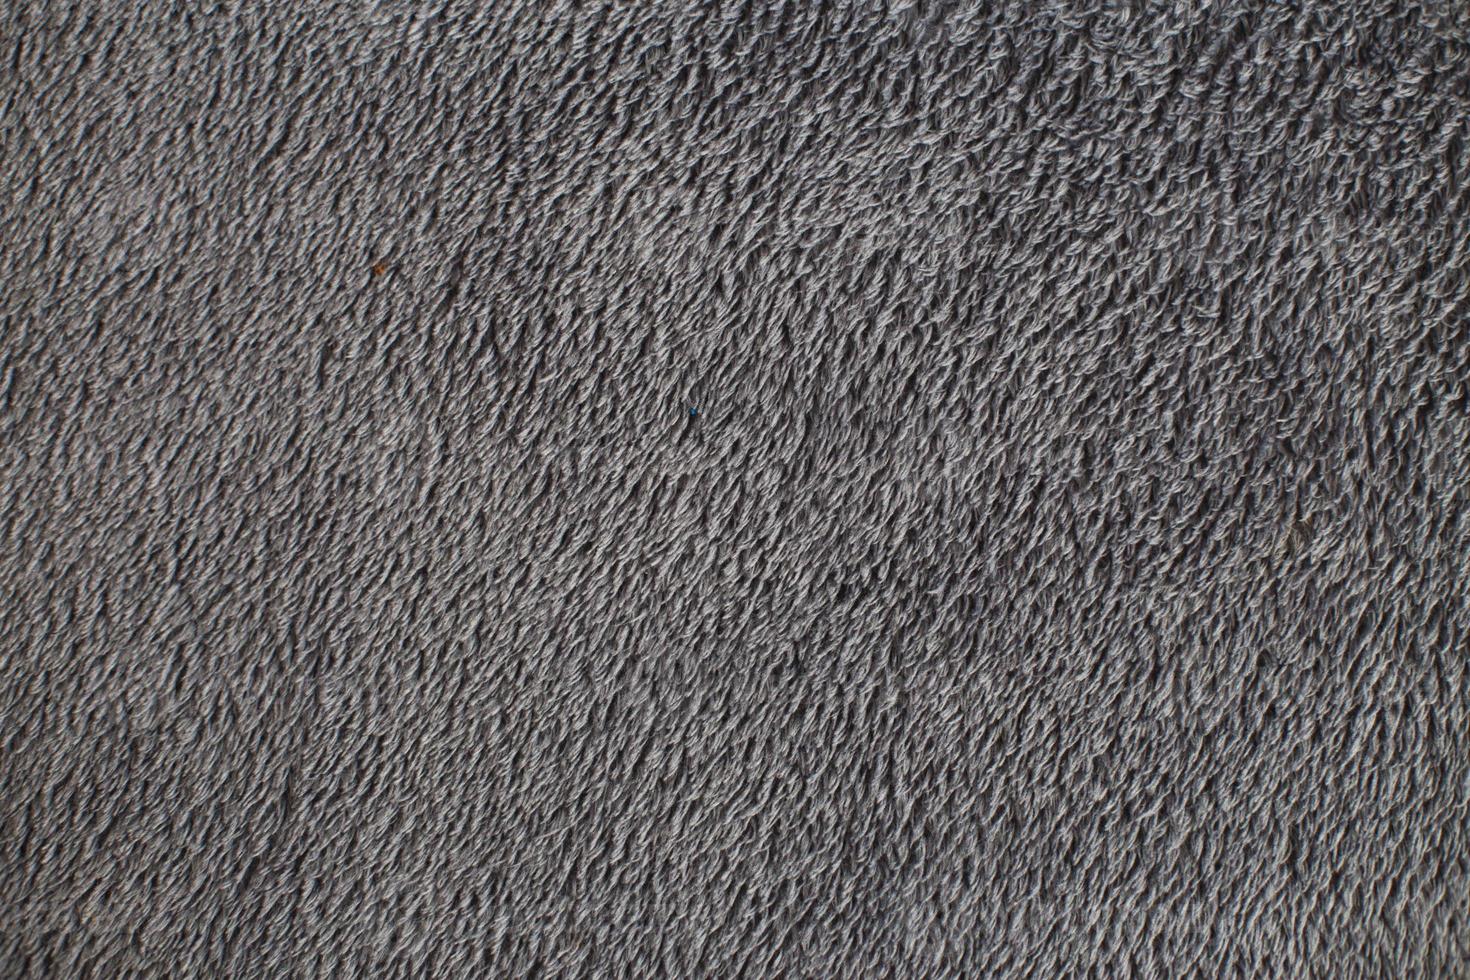 grå plysch tyg bakgrund textur, mjuk material mönster foto